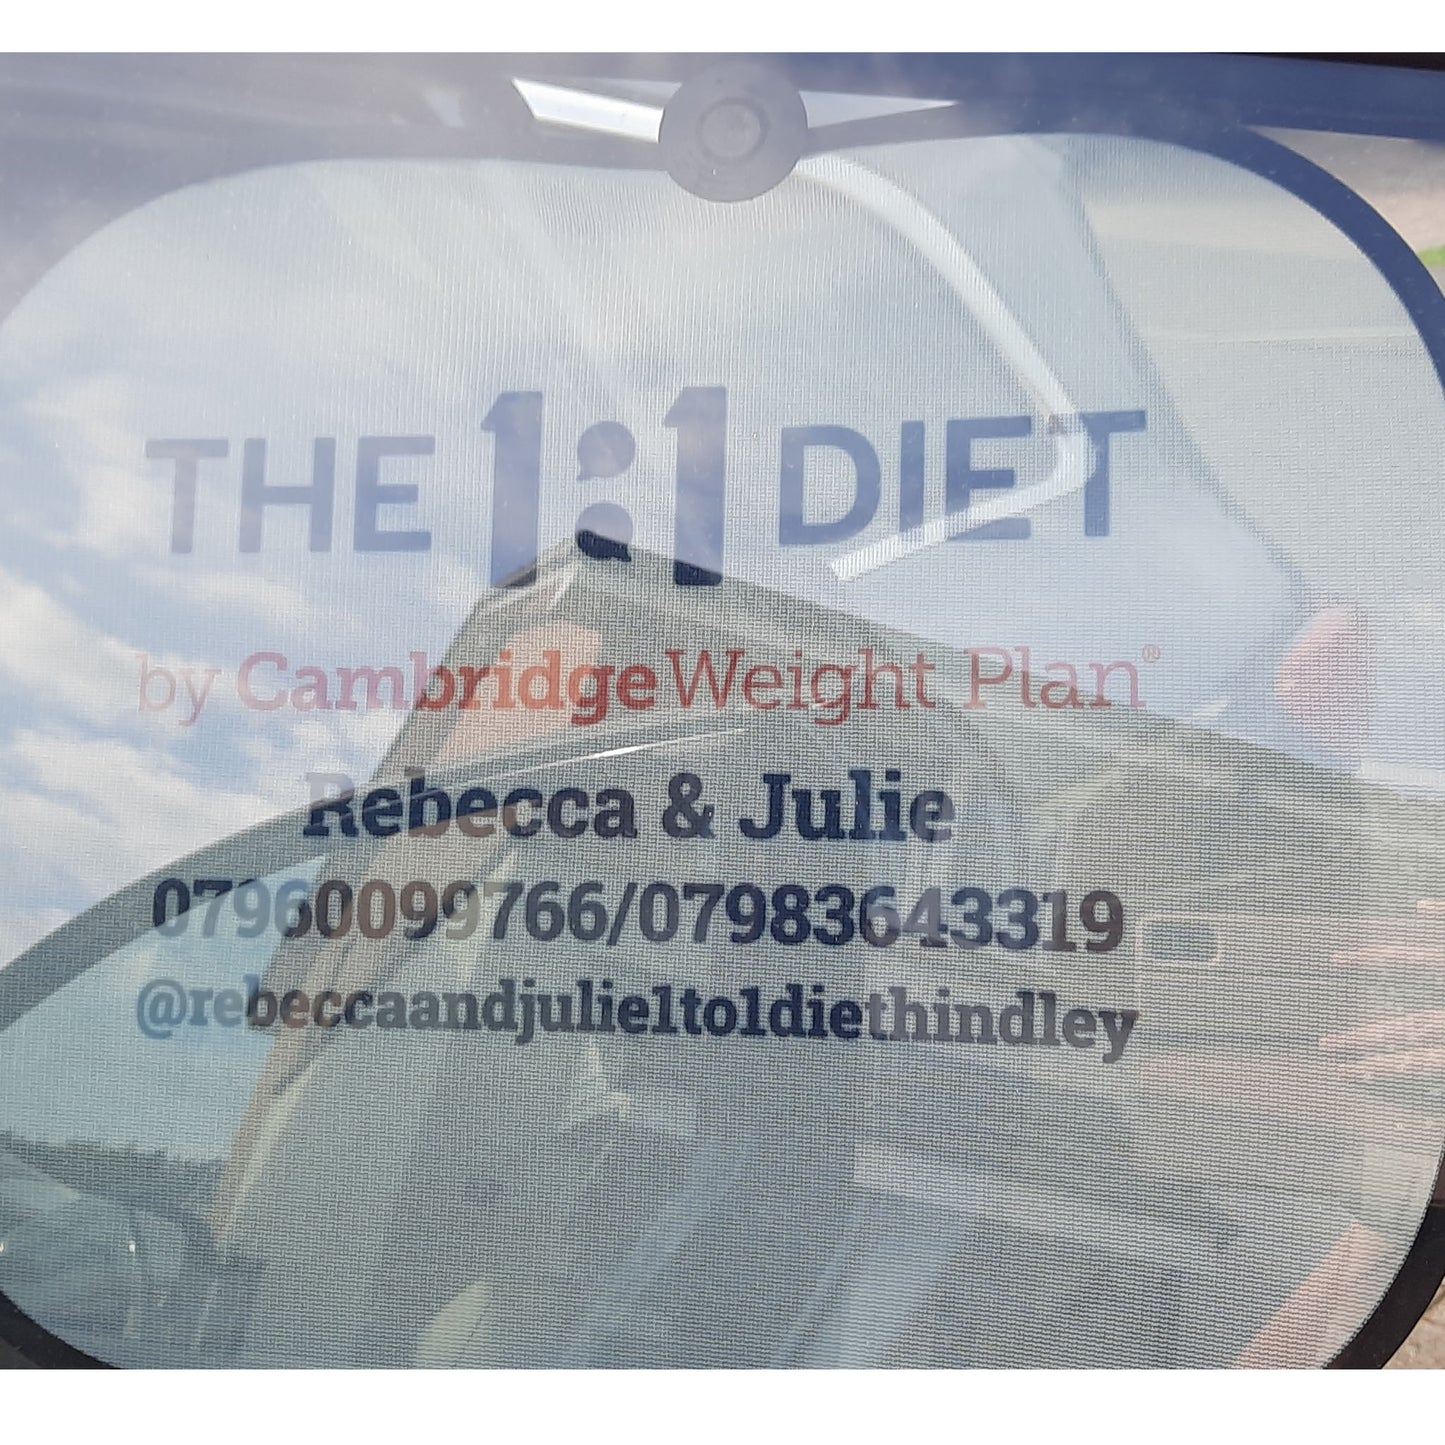 The 1:1 Diet - Car Window Shades